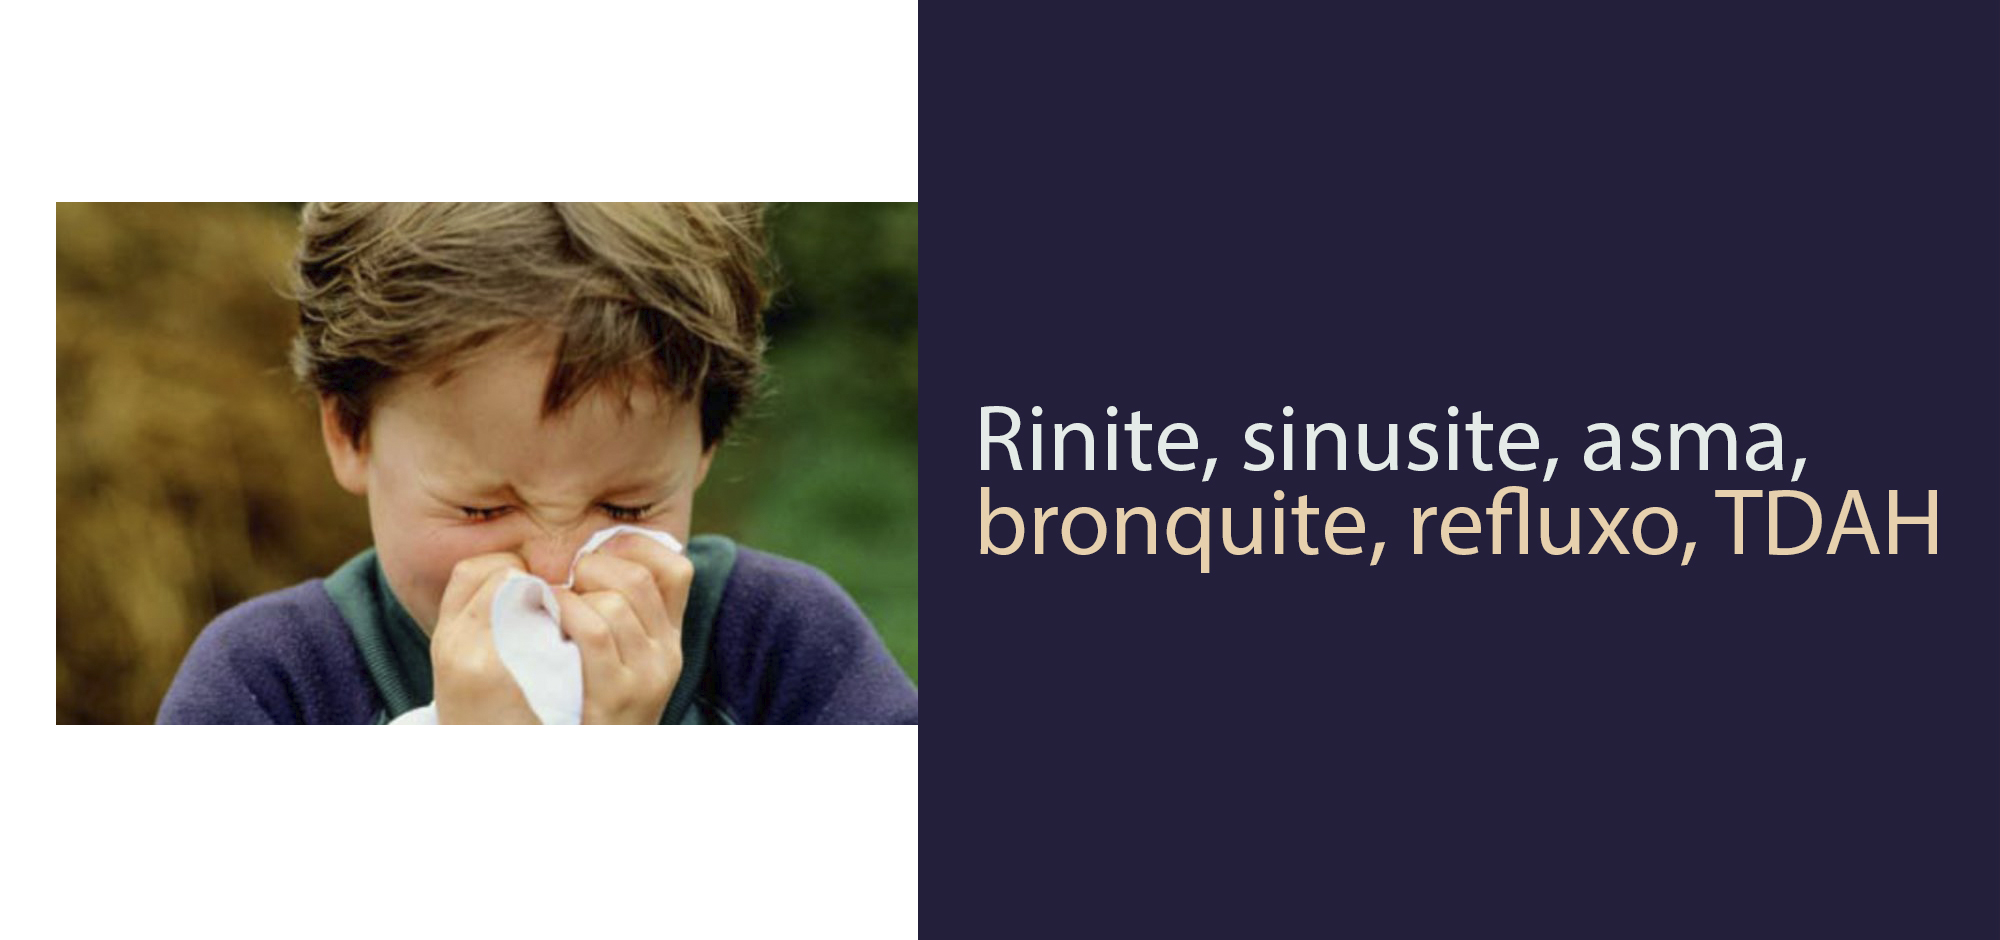 Rinite, sinusite, asma, bronquite, refluxo, TDAH